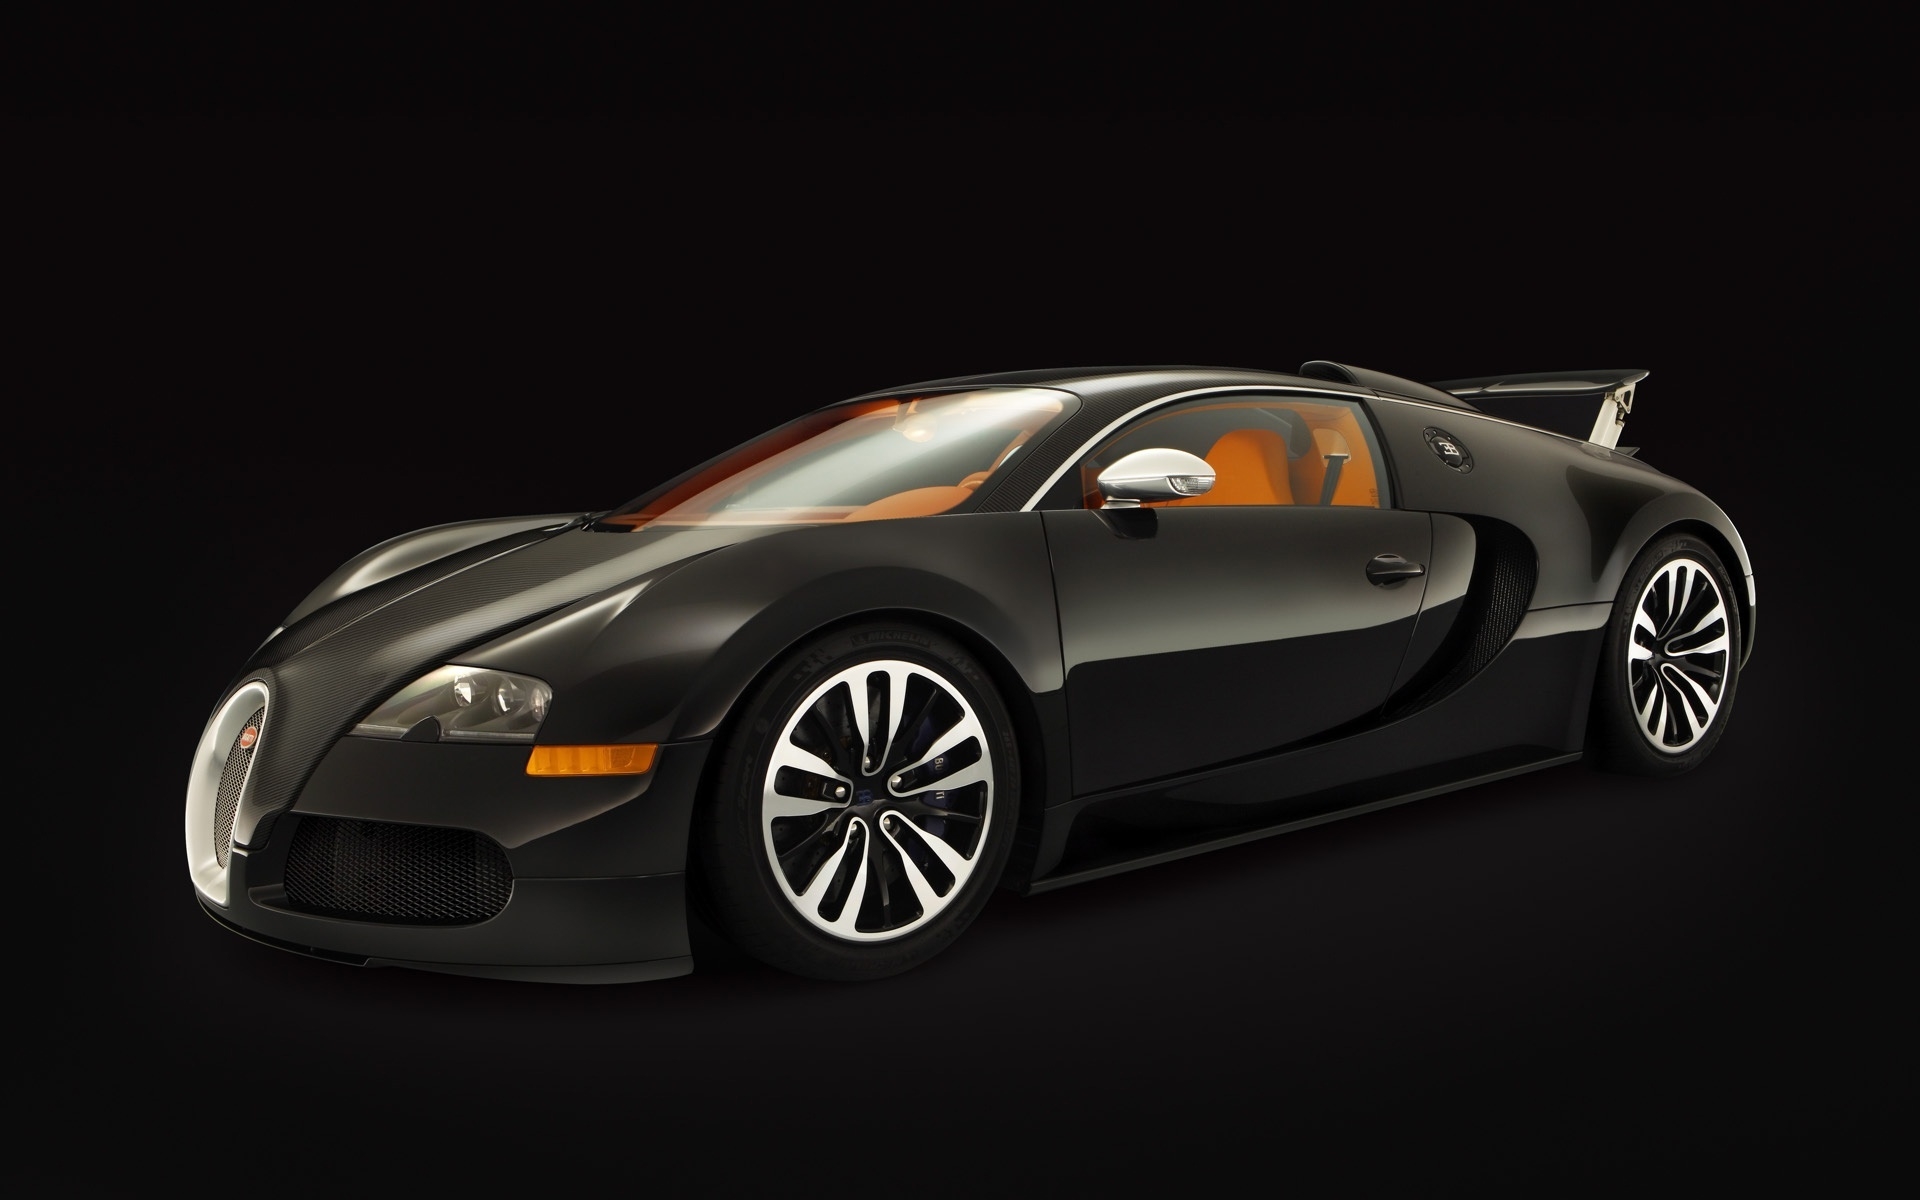 Bugatti Veyron Sang Noir 2008 - Side Angle for 1920 x 1200 widescreen resolution